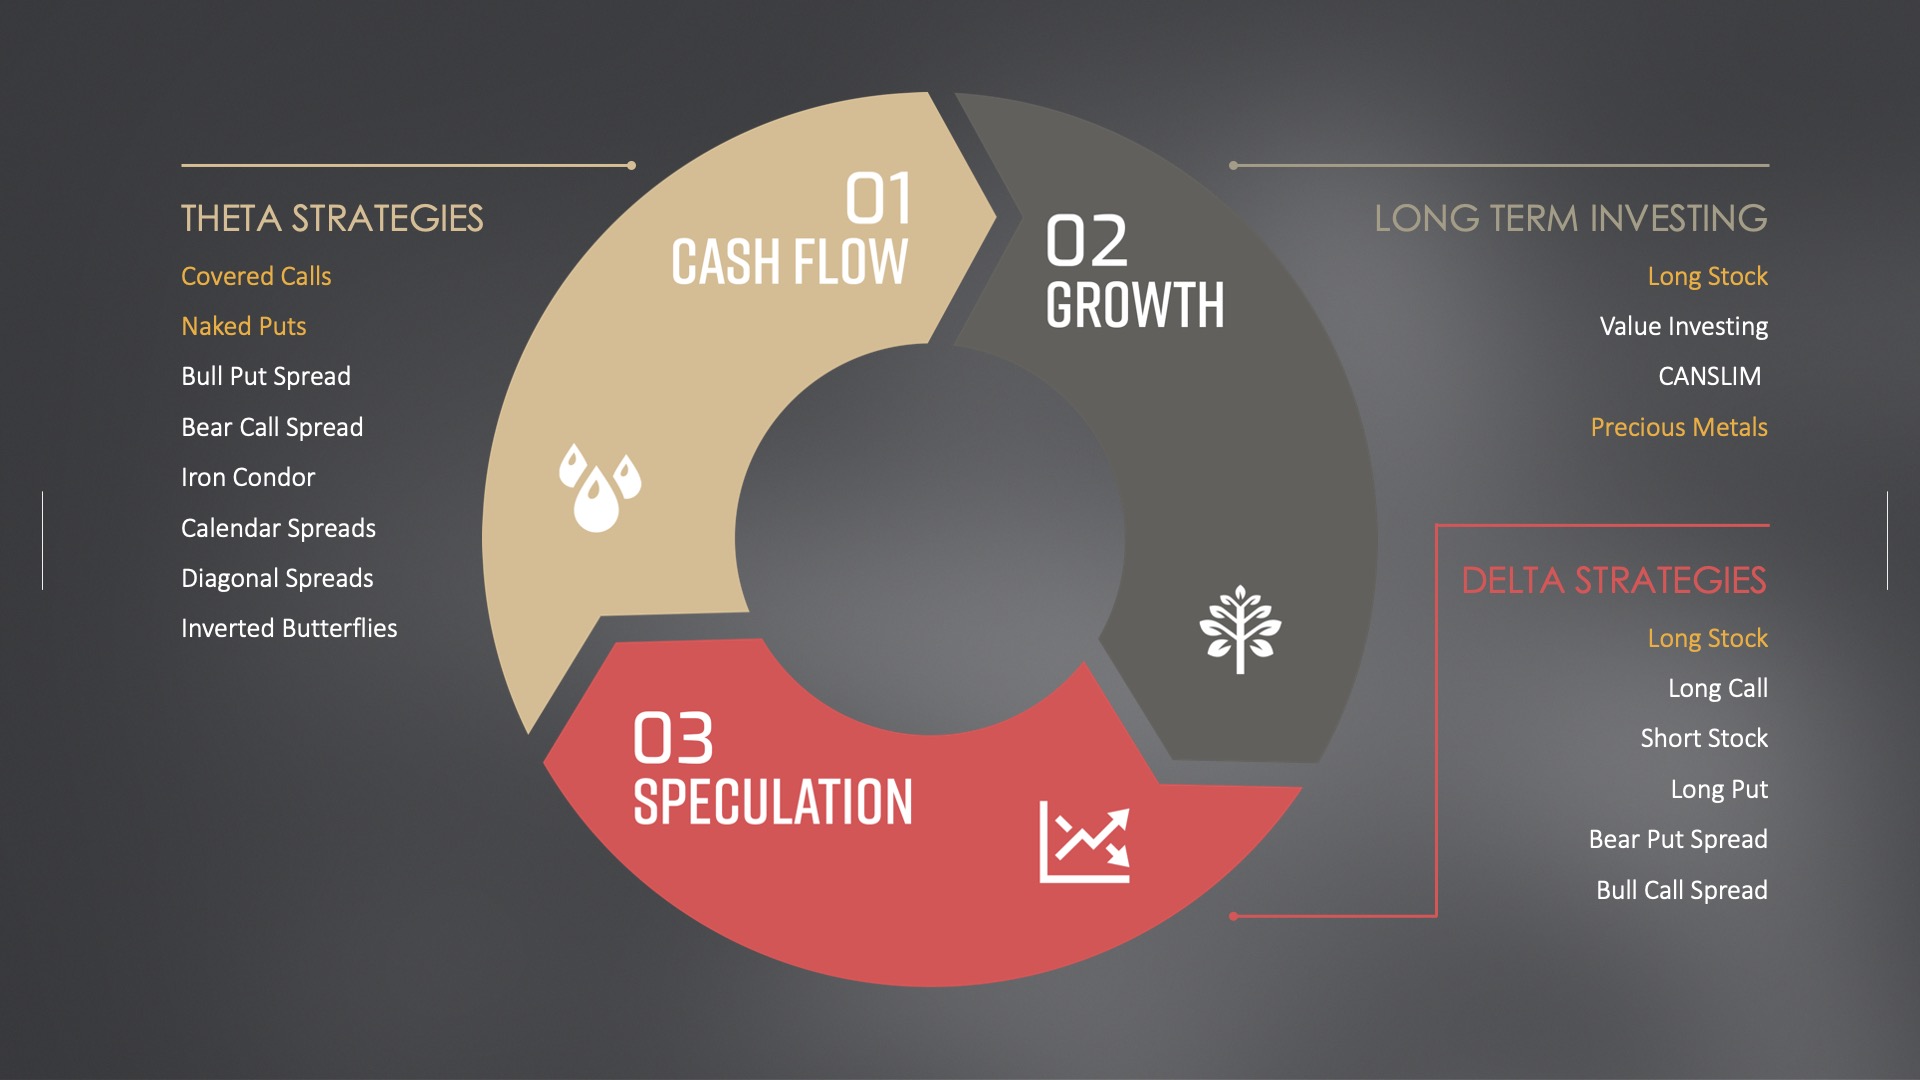 Portfolio Design – Cash Flow, Growth, Speculation